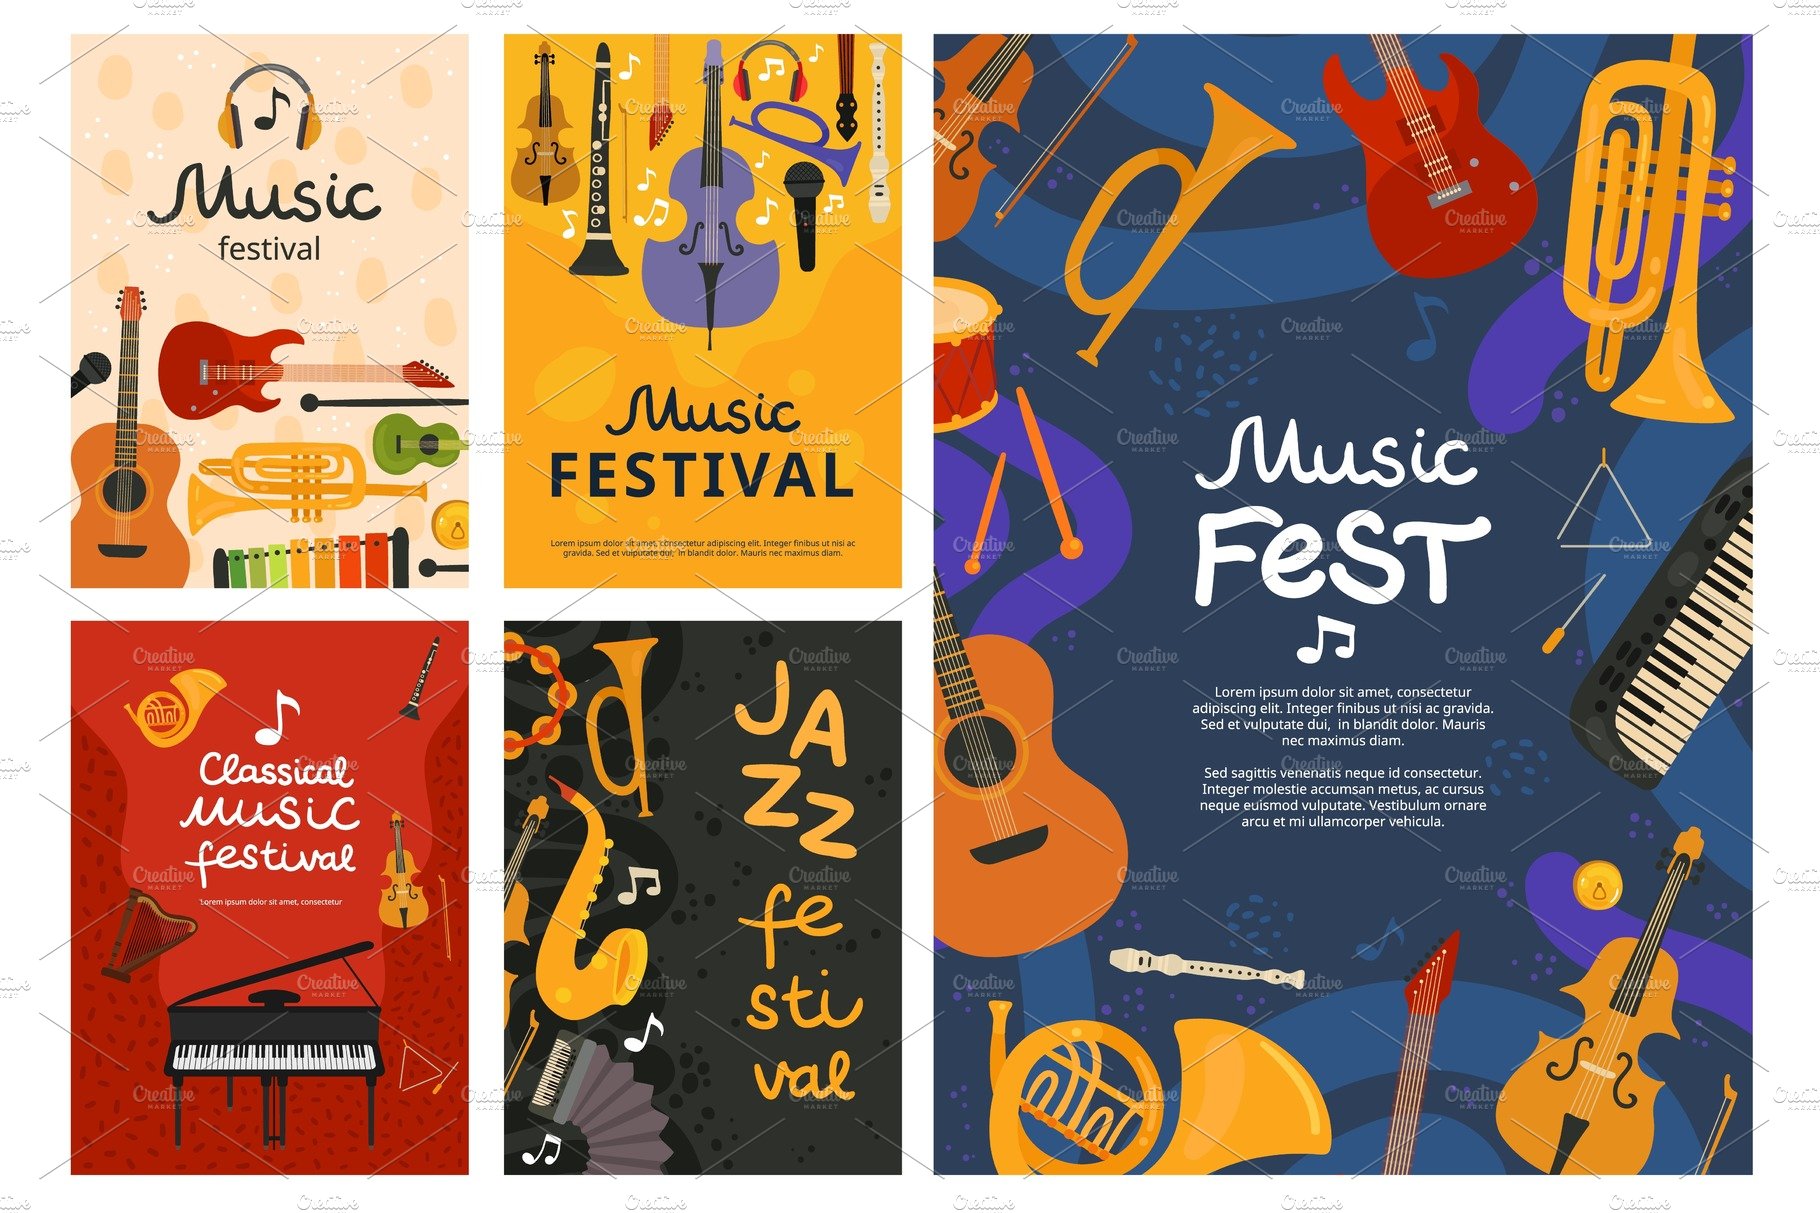 Music festival. Jazz concert cover image.